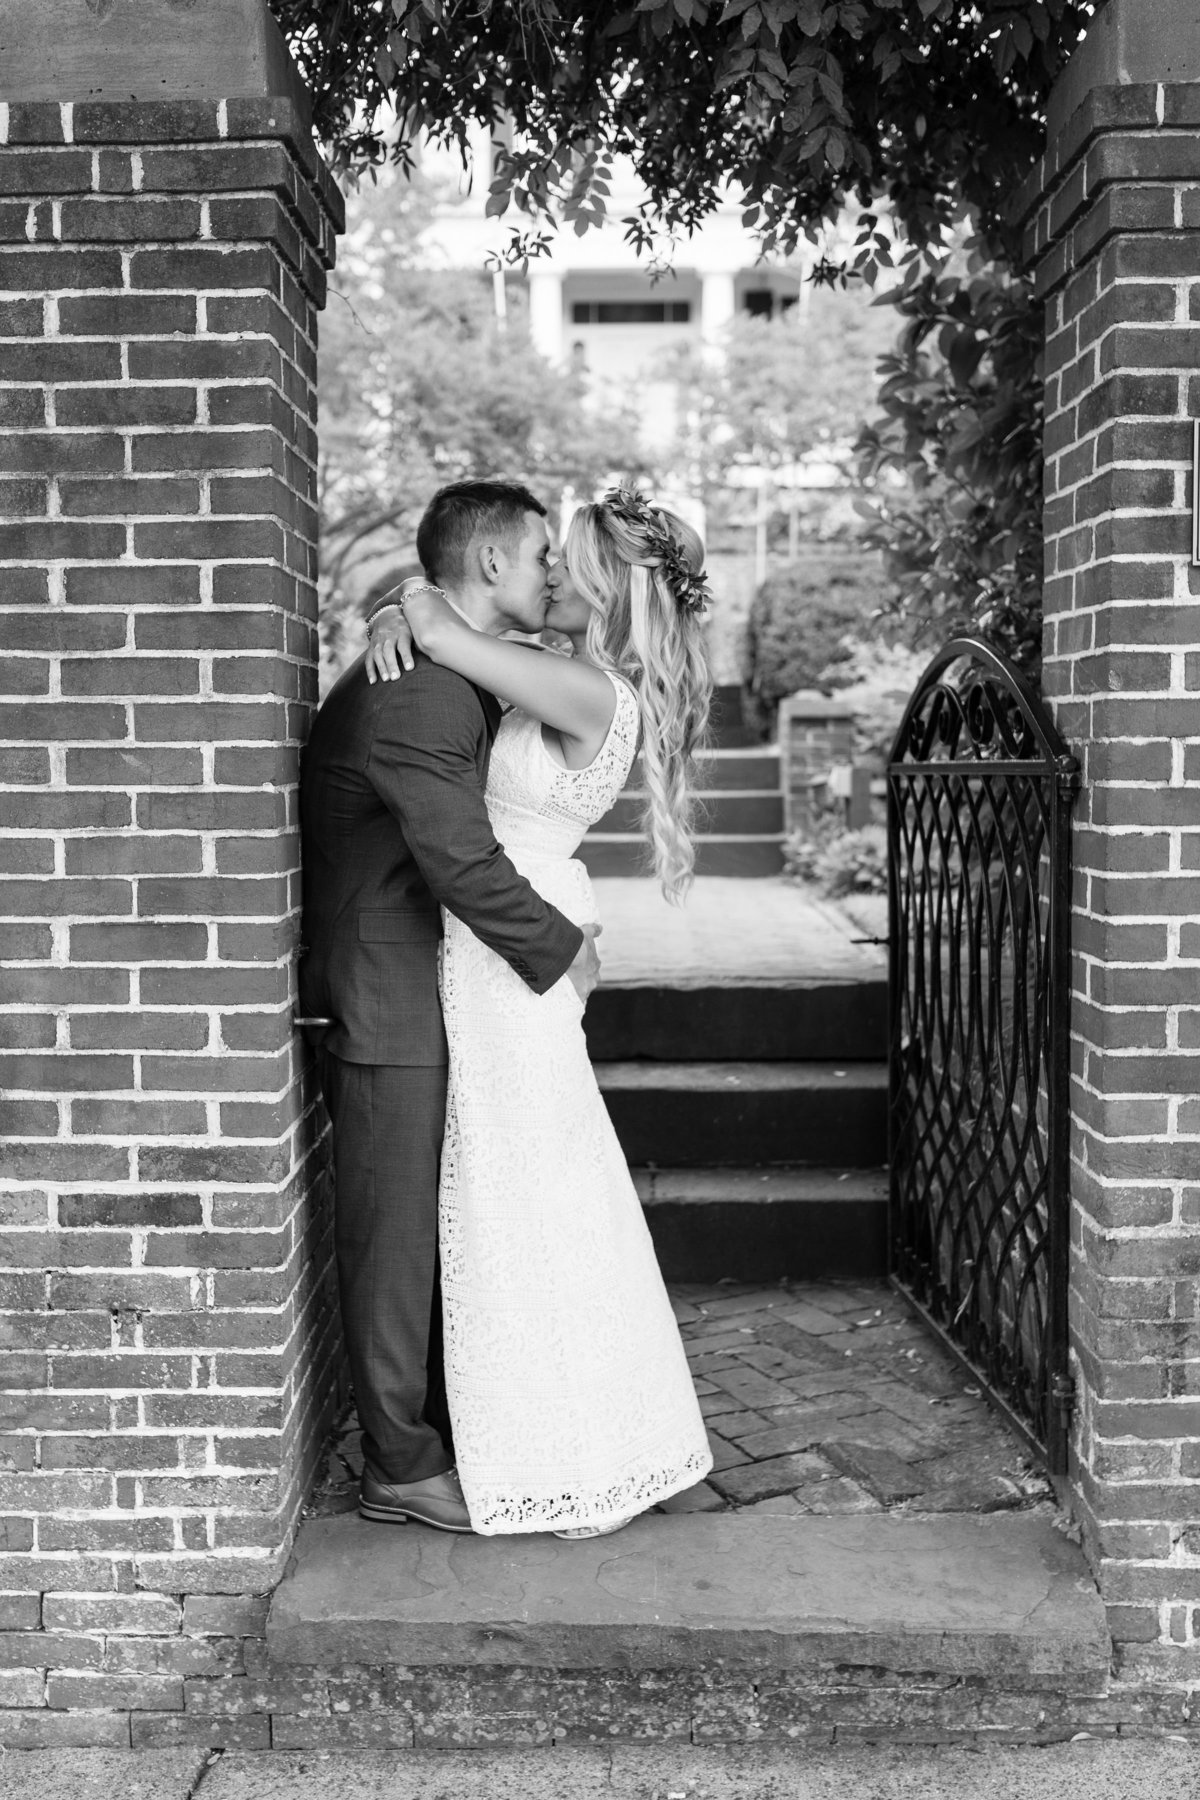 Wilmington NC Wedding Photographers, The Joyner Company, Wilmington NC Wedding Photo and Video, North Carolina Wedding Photo and Video team, Wedding Photographers, Destination Wedding Photographers